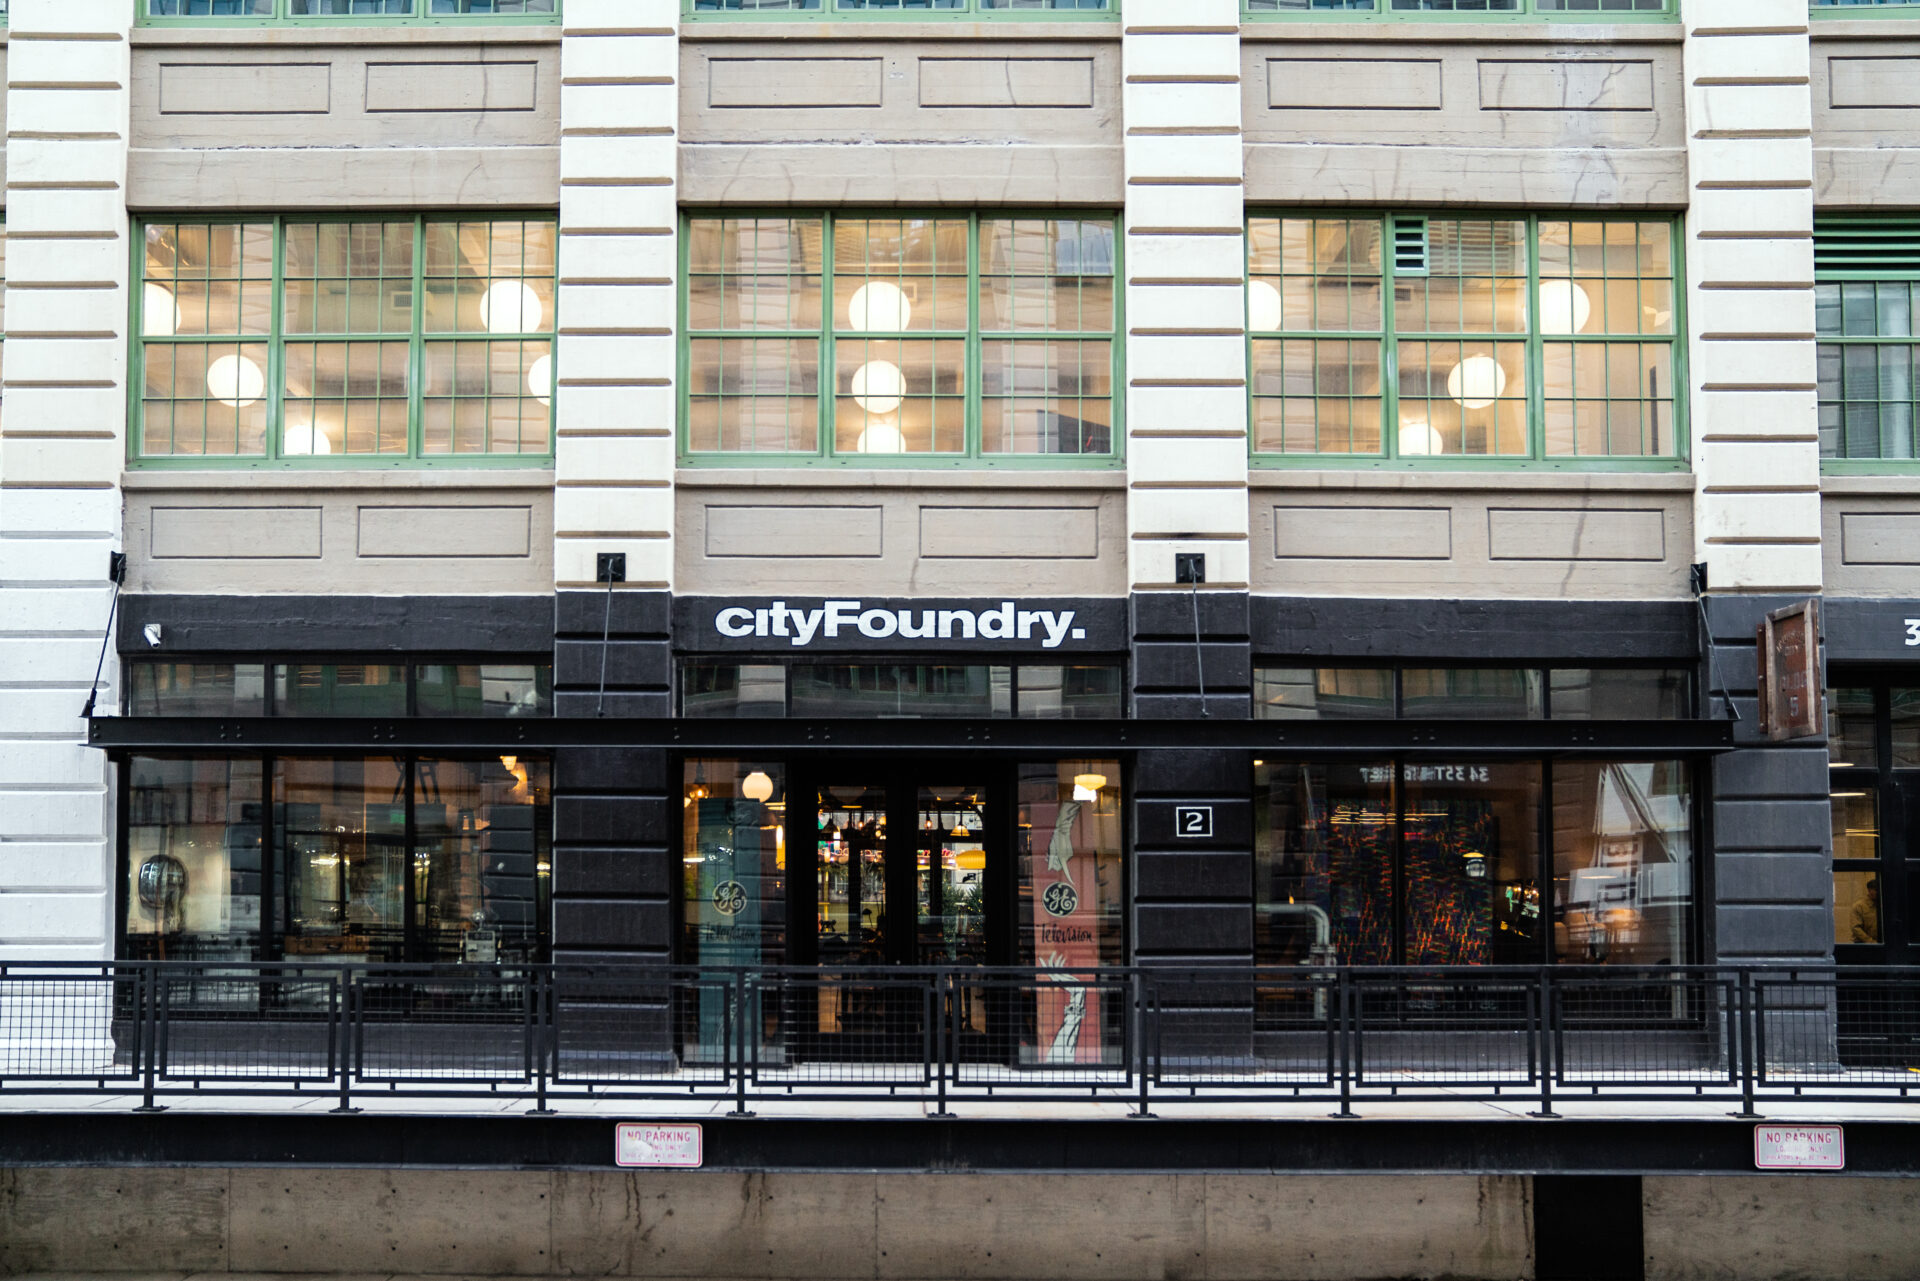 The exterior of "cityFoundry."